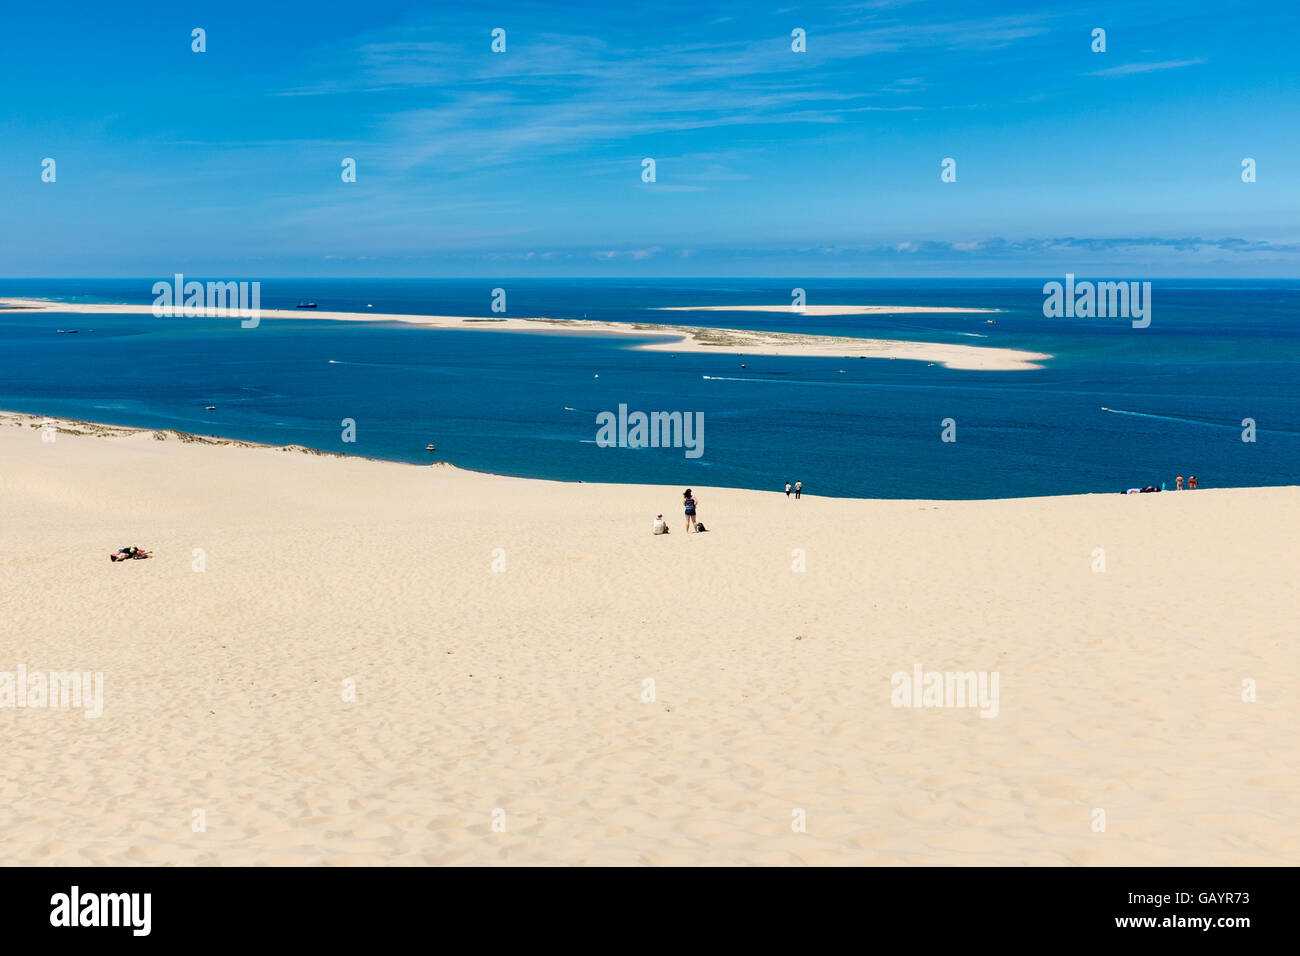 Europe's largest sand dunes at dunes du pilat near Arcachon in South ...